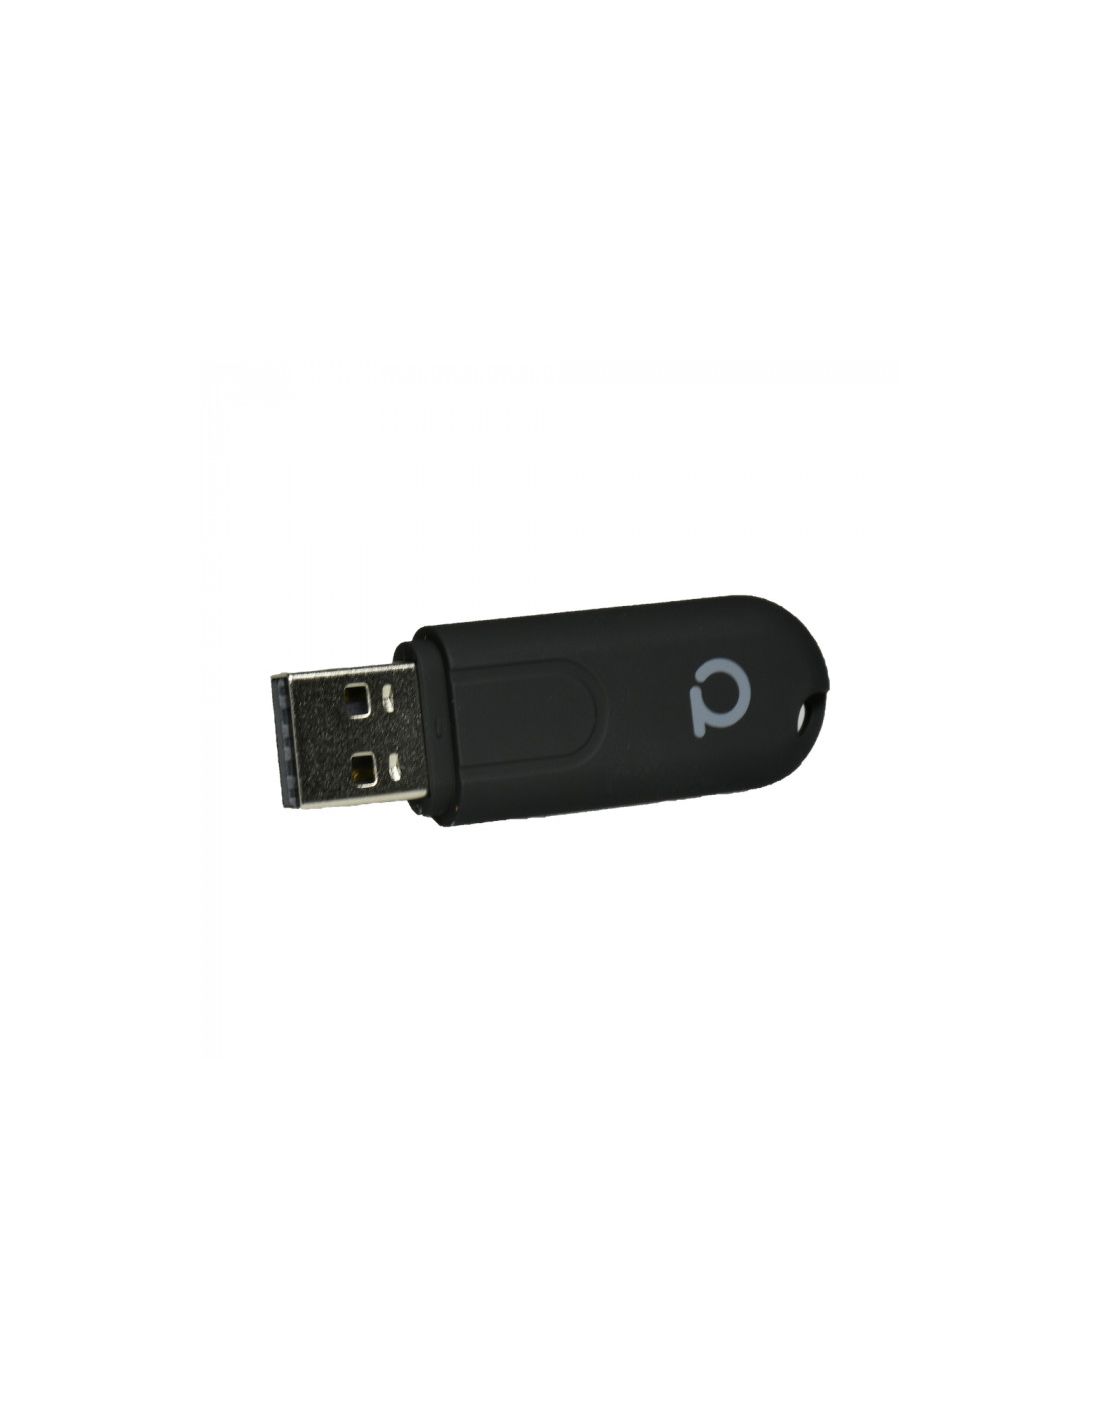 ConBee II ZigBee USB Gateway Dongle and Phoscon Gateway - CNX Software